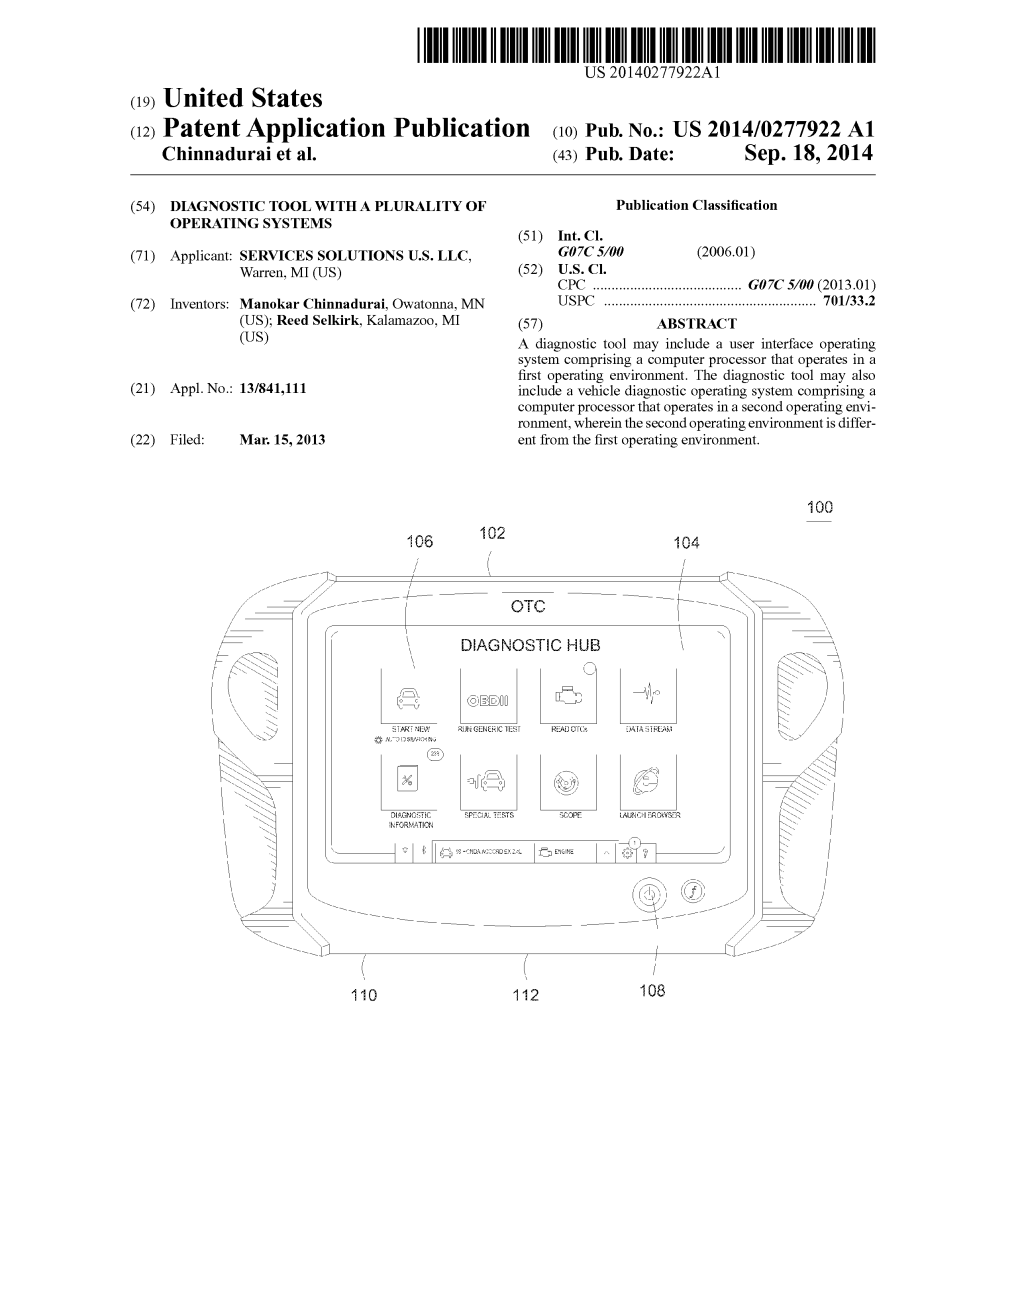 (12) Patent Application Publication (10) Pub. No.: US 2014/0277922 A1 Chinnadurai Et Al